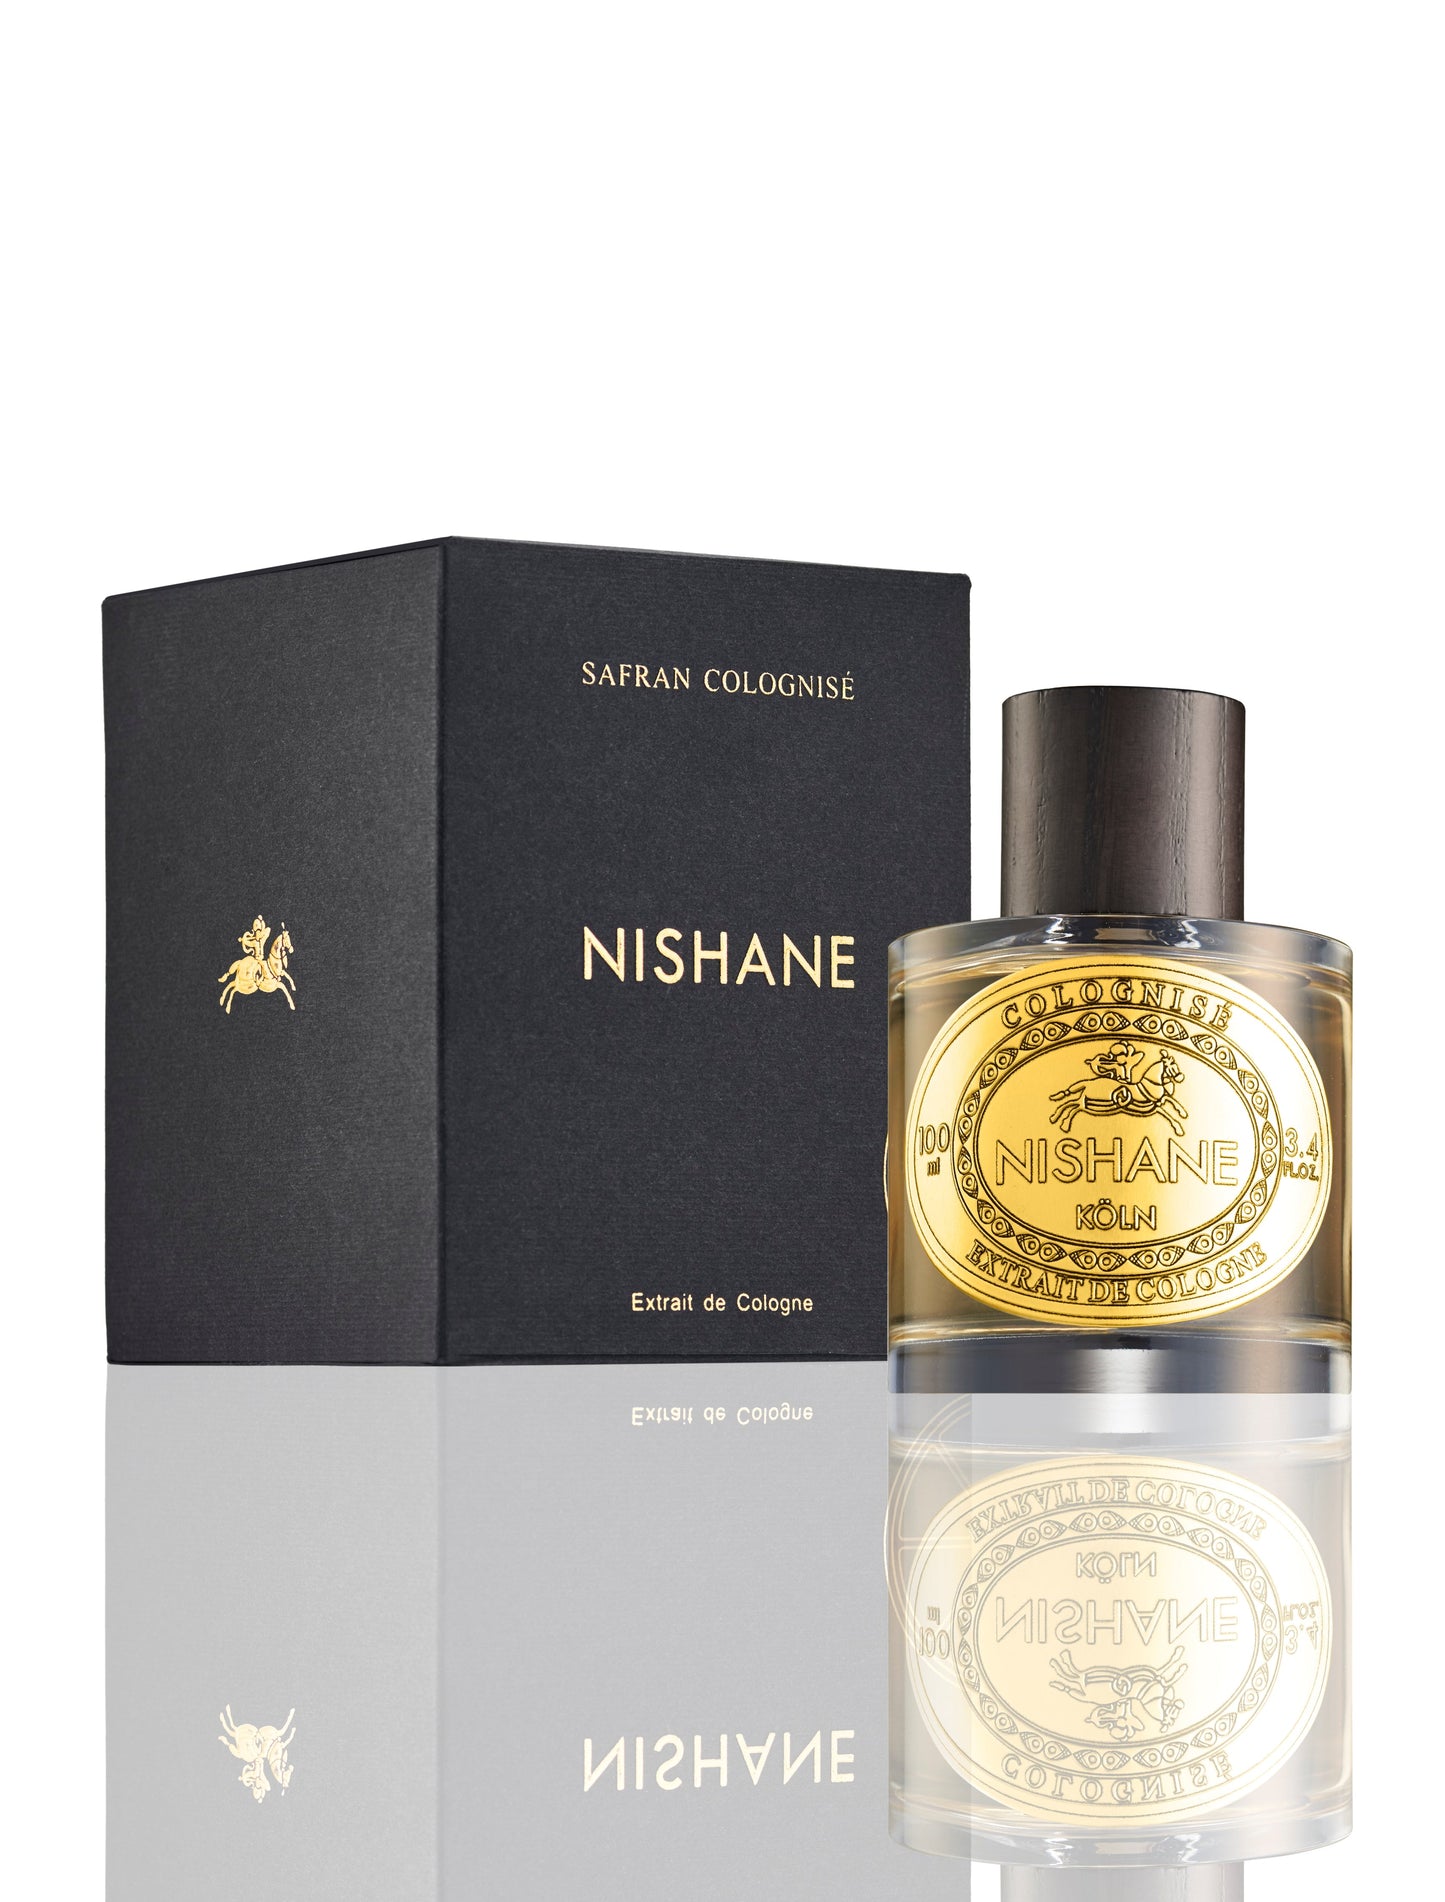 Safran Colognise Nishane Extrait de Cologne Sample 2ml